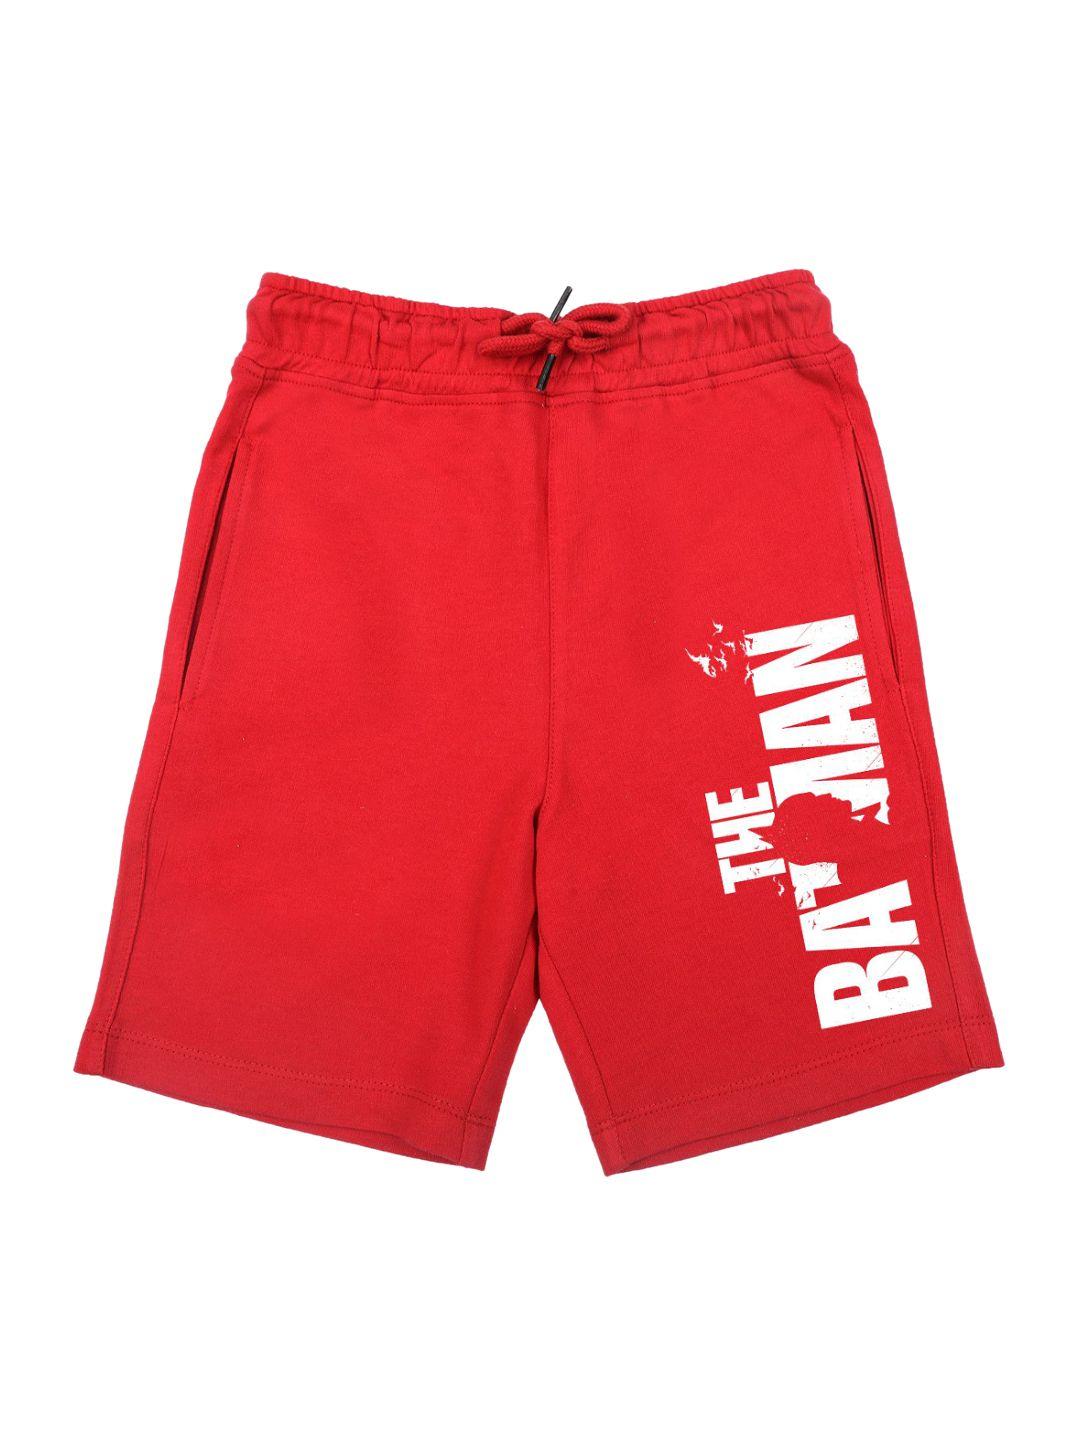 dc by wear your mind boys red batman shorts